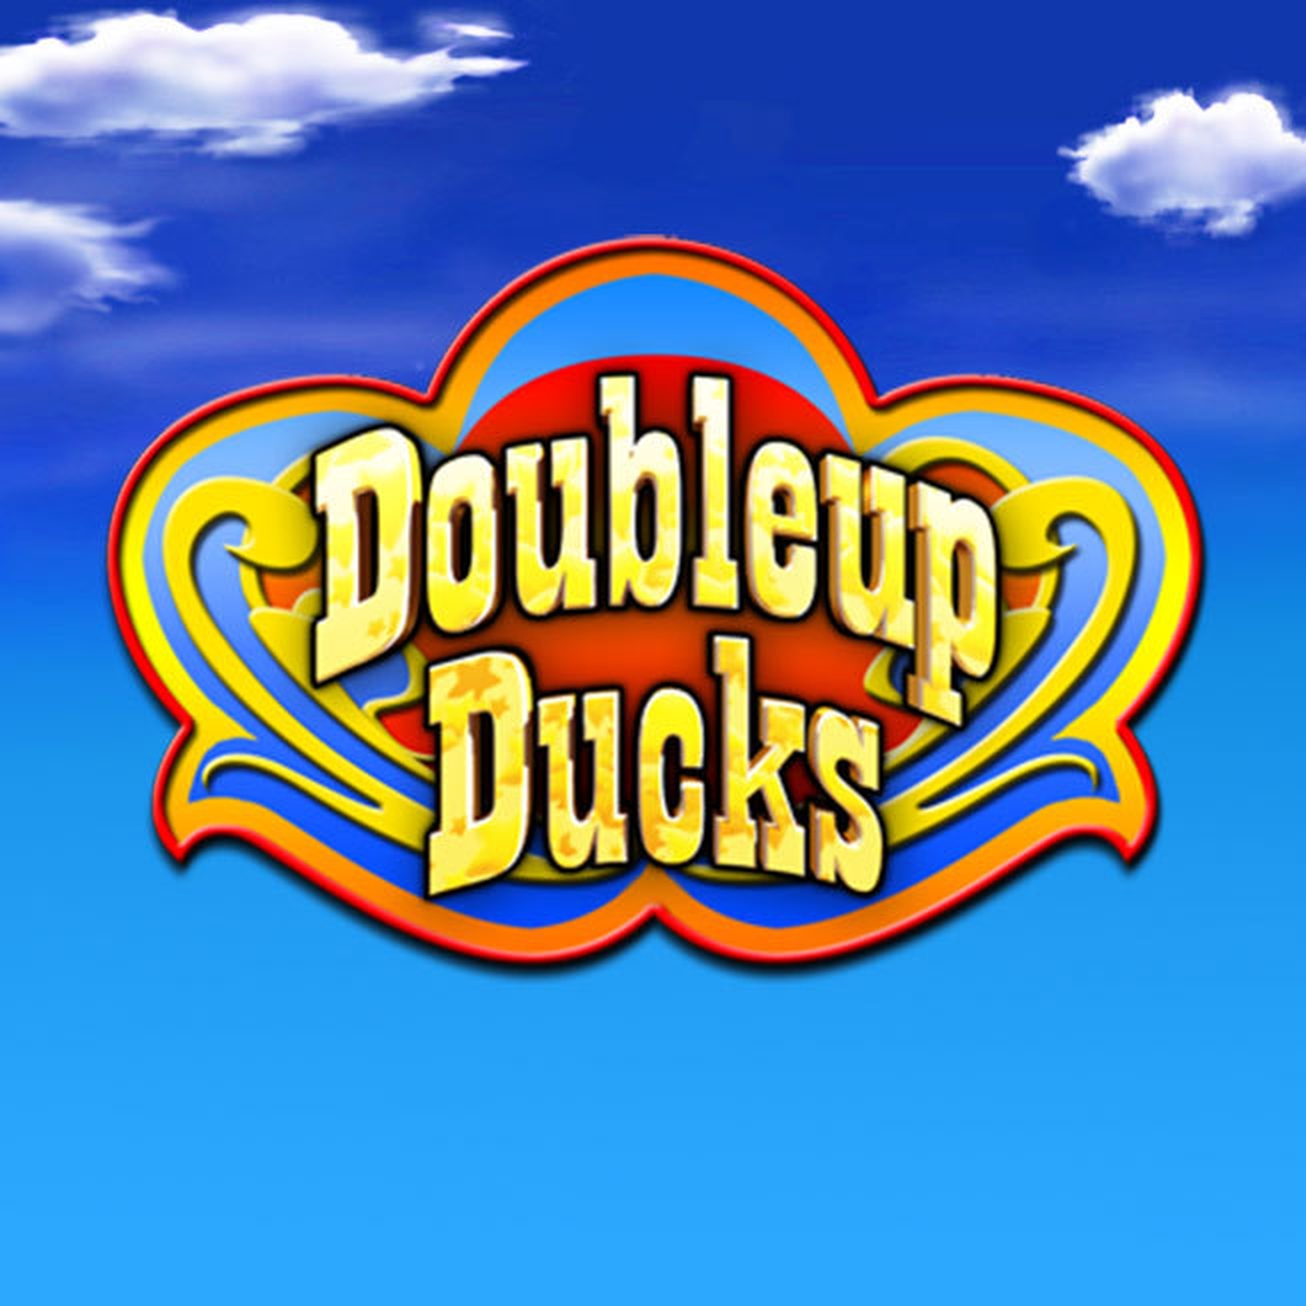 Doubleup Ducks demo